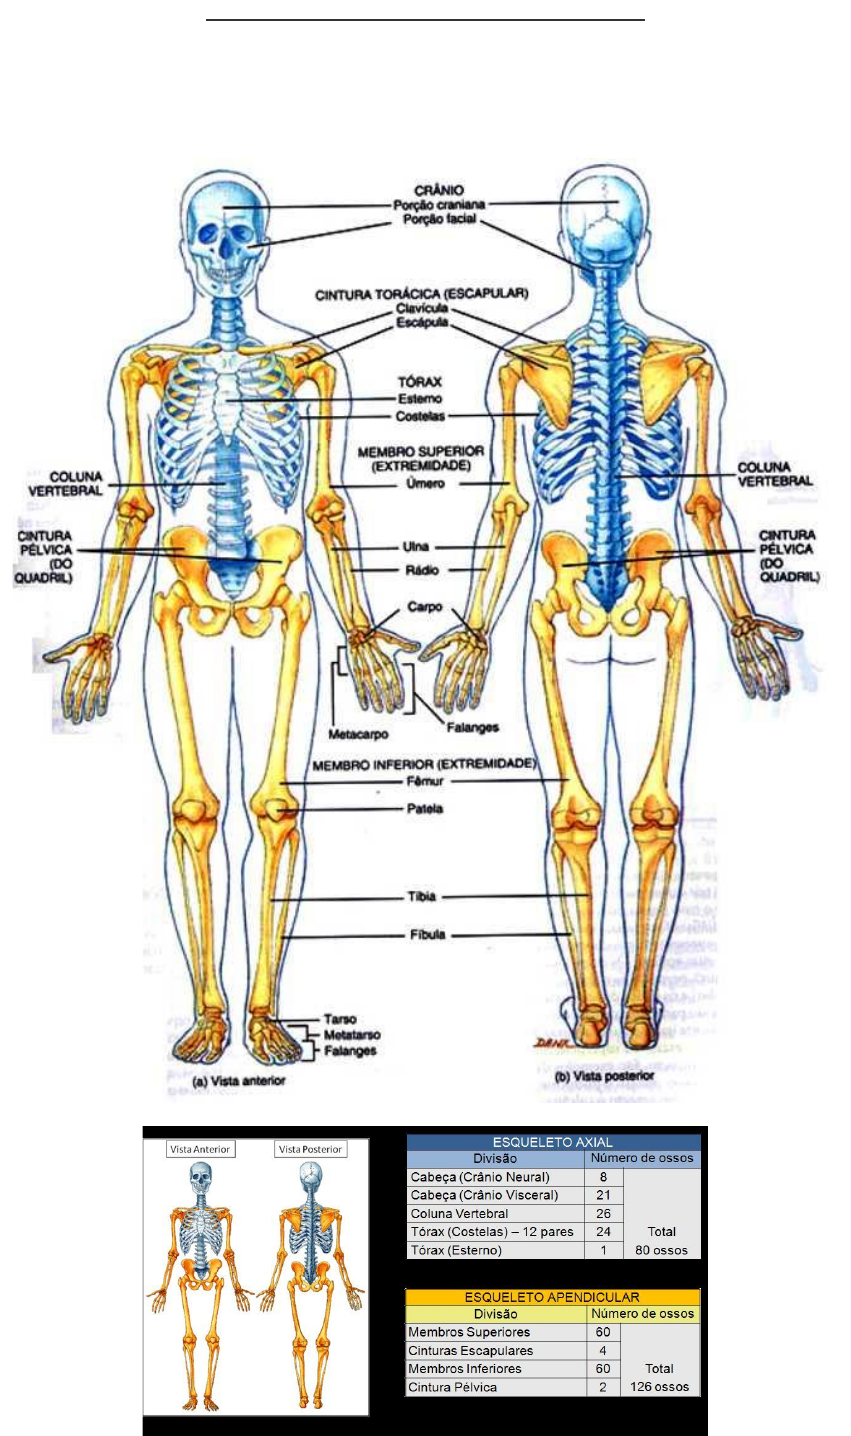 Prancha do Esqueleto Axial e Esqueleto Apendicular - Anatomia I